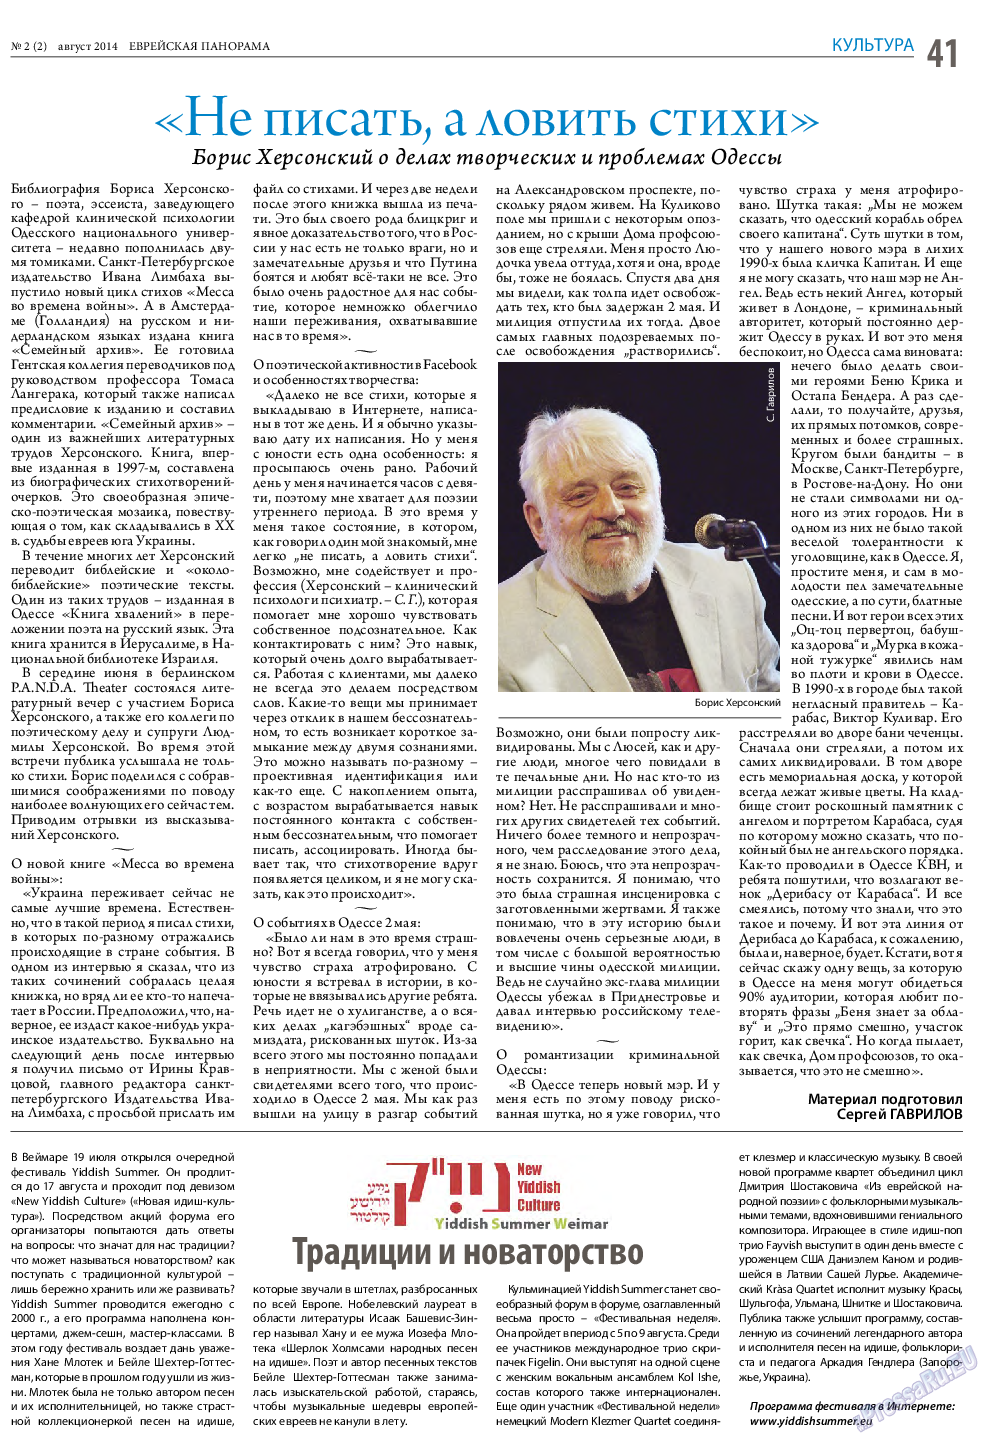 Еврейская панорама, газета. 2014 №2 стр.41